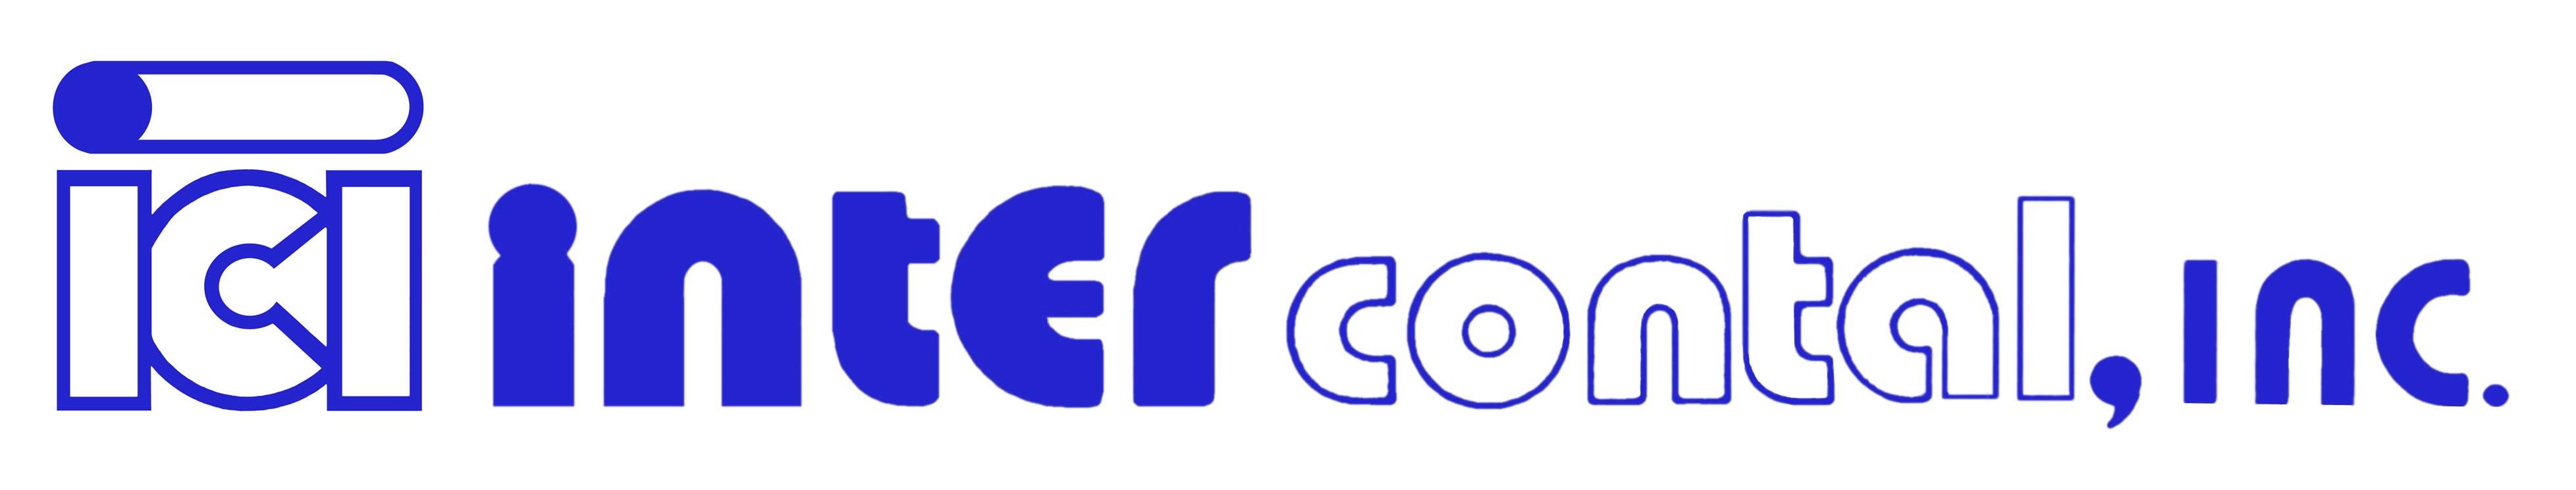 Logo combined